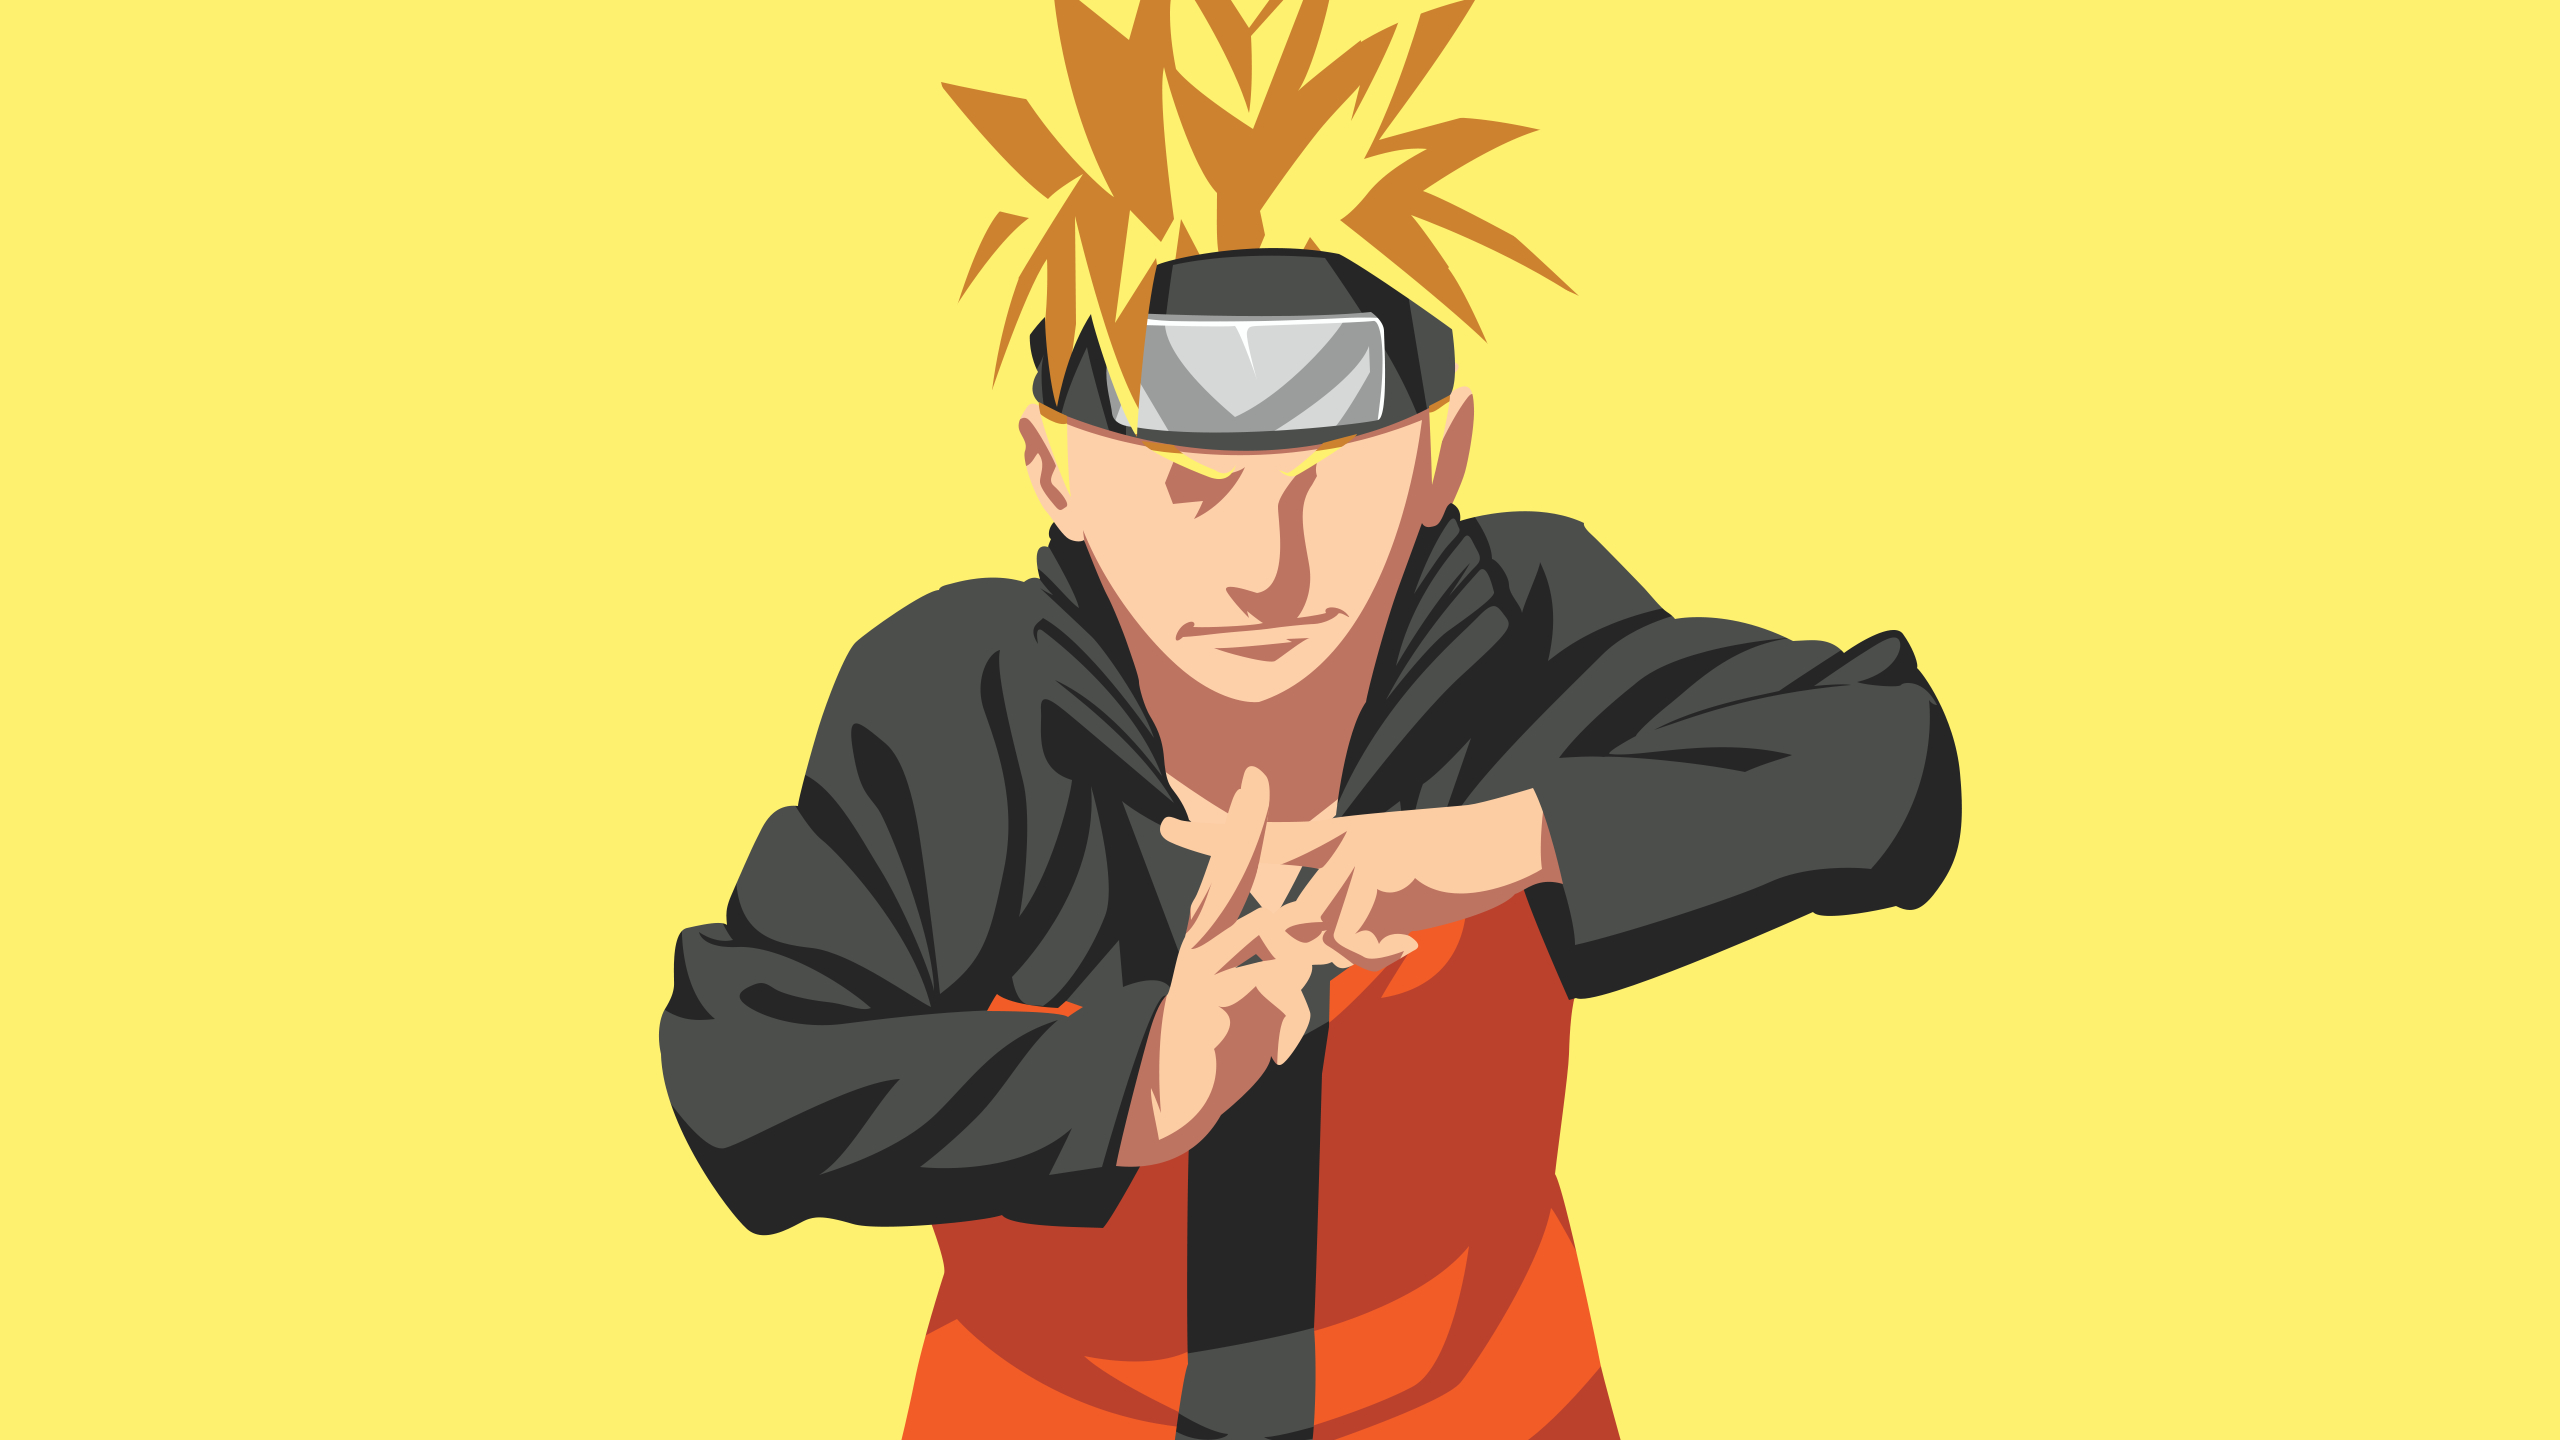 Naruto Uzumaki Minimal Art Wallpaper, HD Anime 4K Wallpapers, Images,  Photos and Background - Wallpapers Den